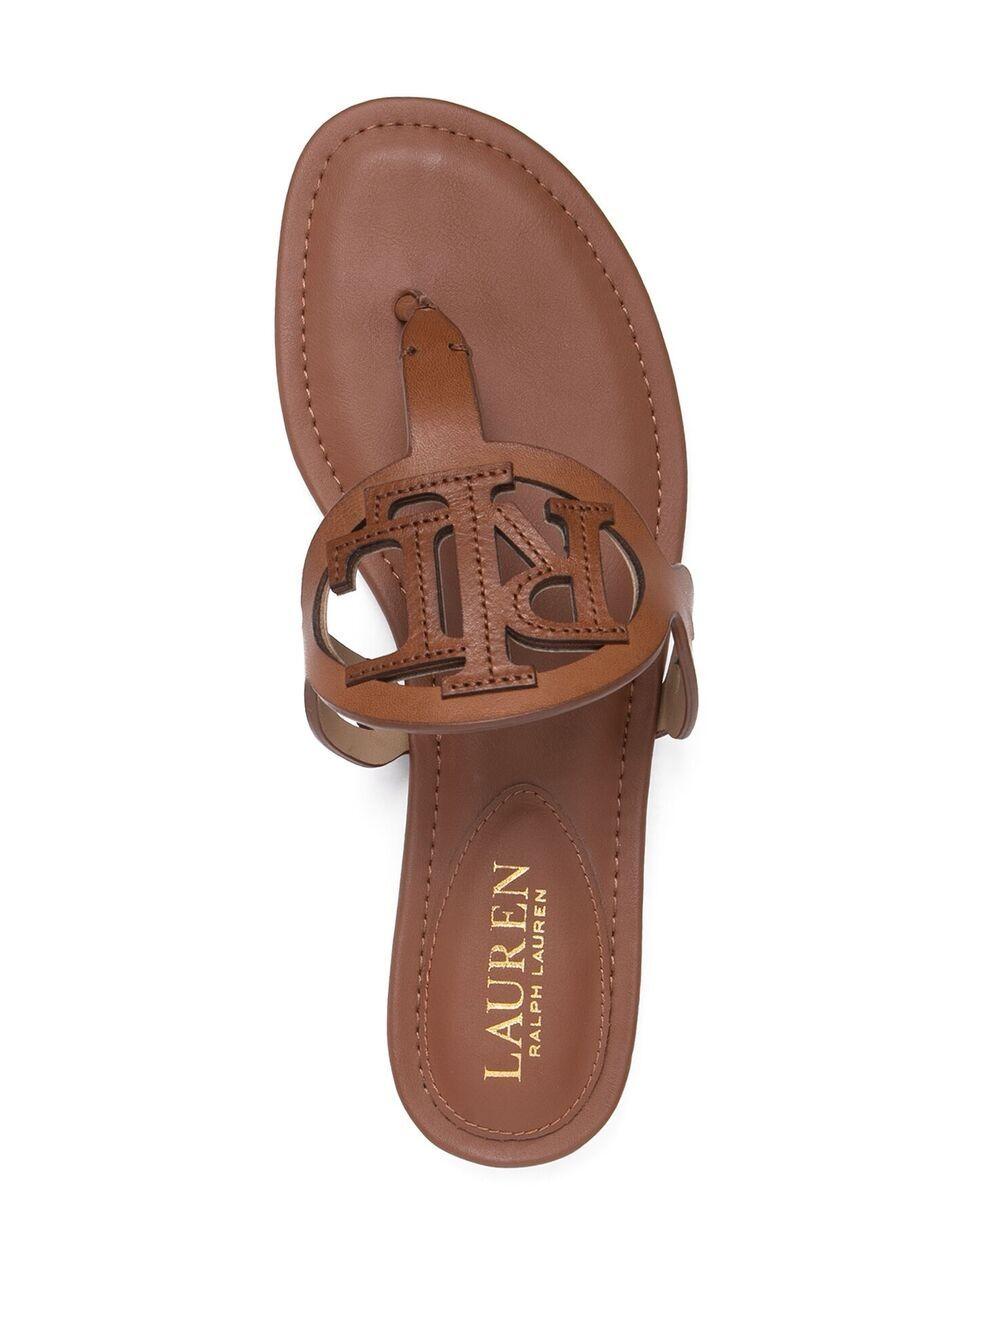 Lauren by Ralph Lauren Audrie Flat Leather Sandals in Brown | Lyst